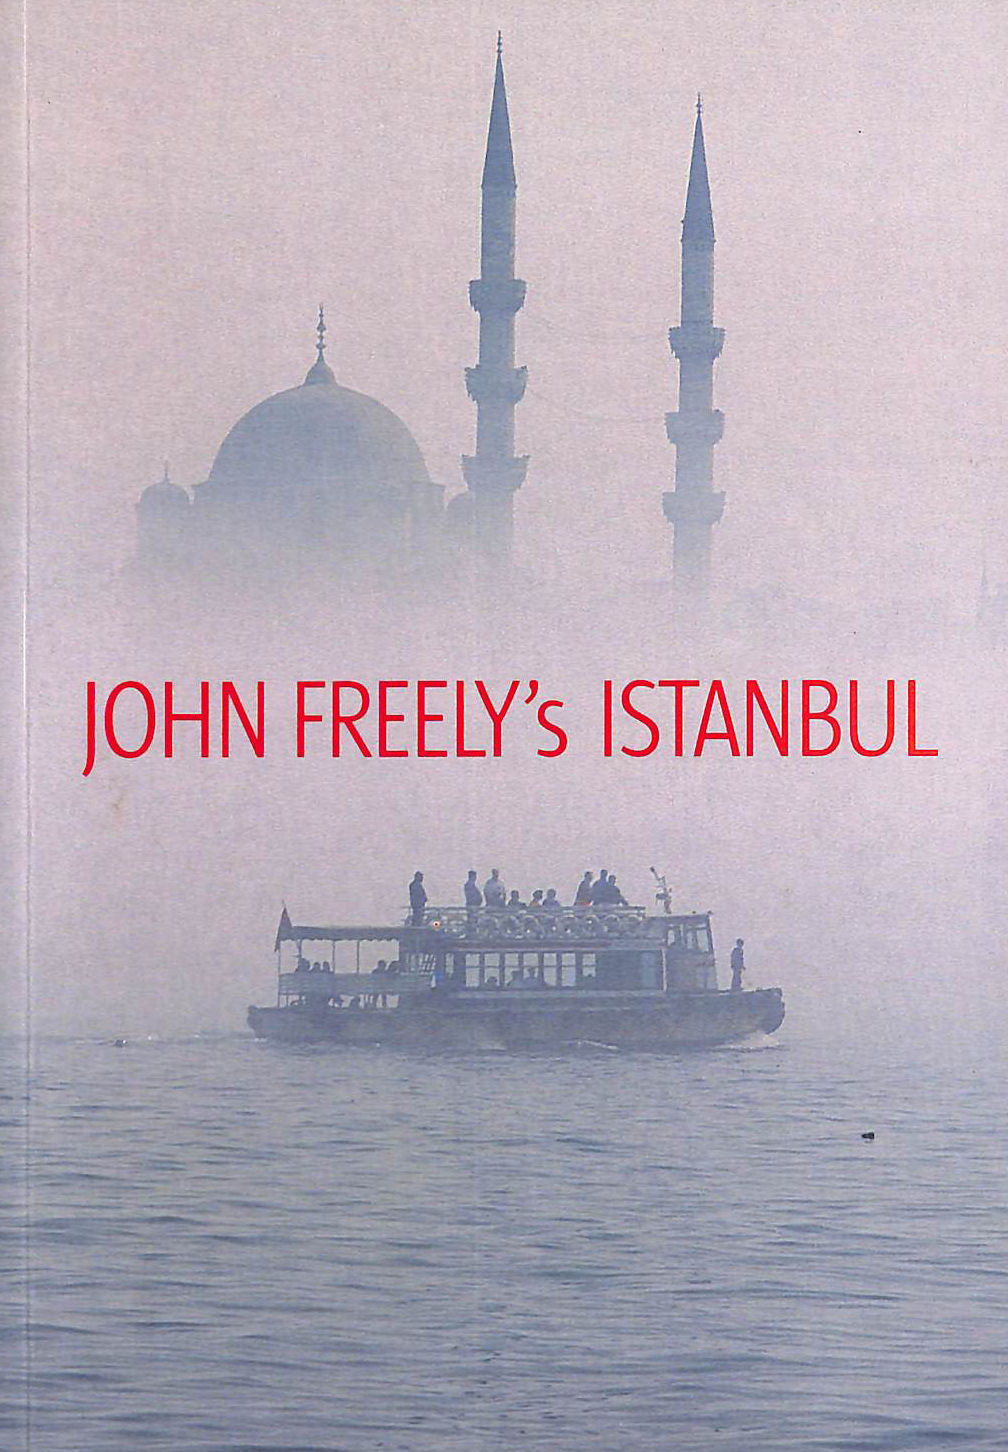 JOHN FREELY; ERDAL YAZICI [PHOTOGRAPHER] - John Freely's Istanbul: In Memory of Hilary Sumner-Boyd: Twenty-First Century Impressions